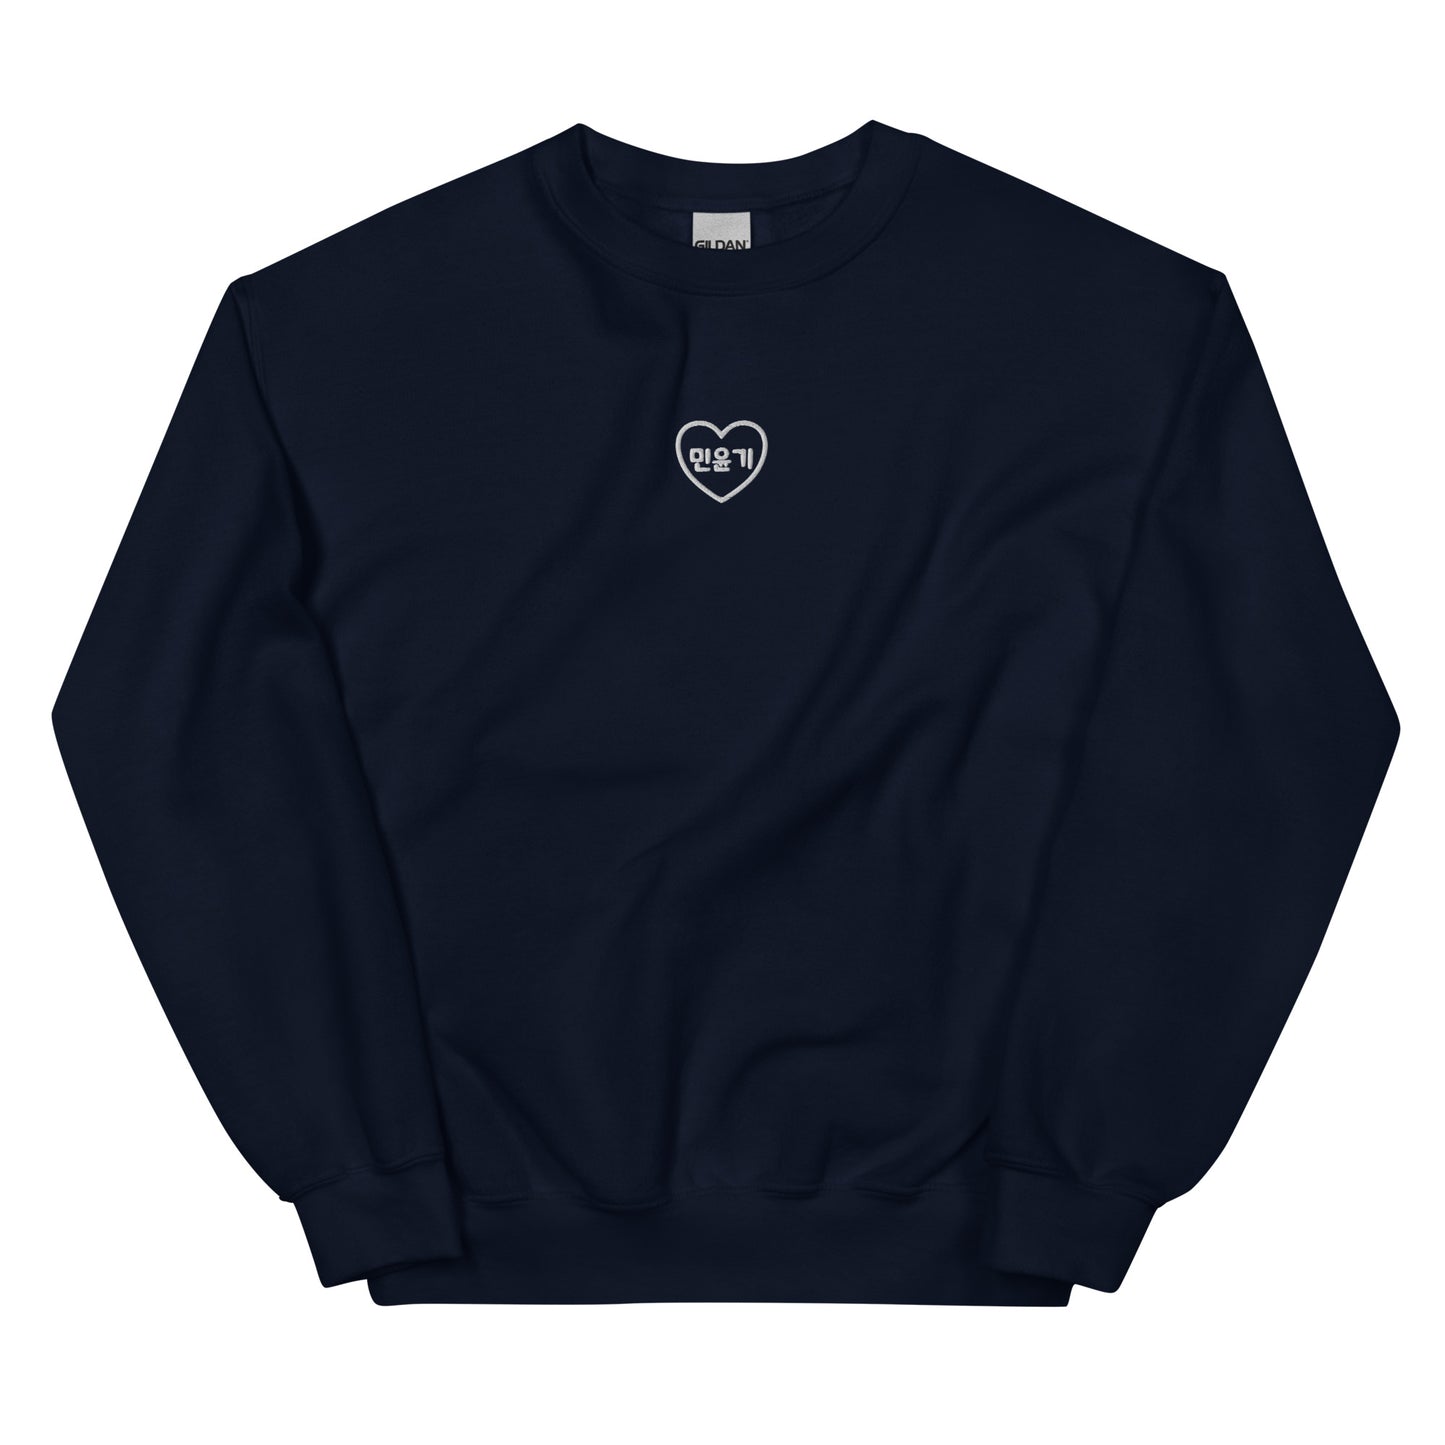 BTS Suga, Min Yoon-gi in Korean Heart Embroidery Unisex Sweatshirt